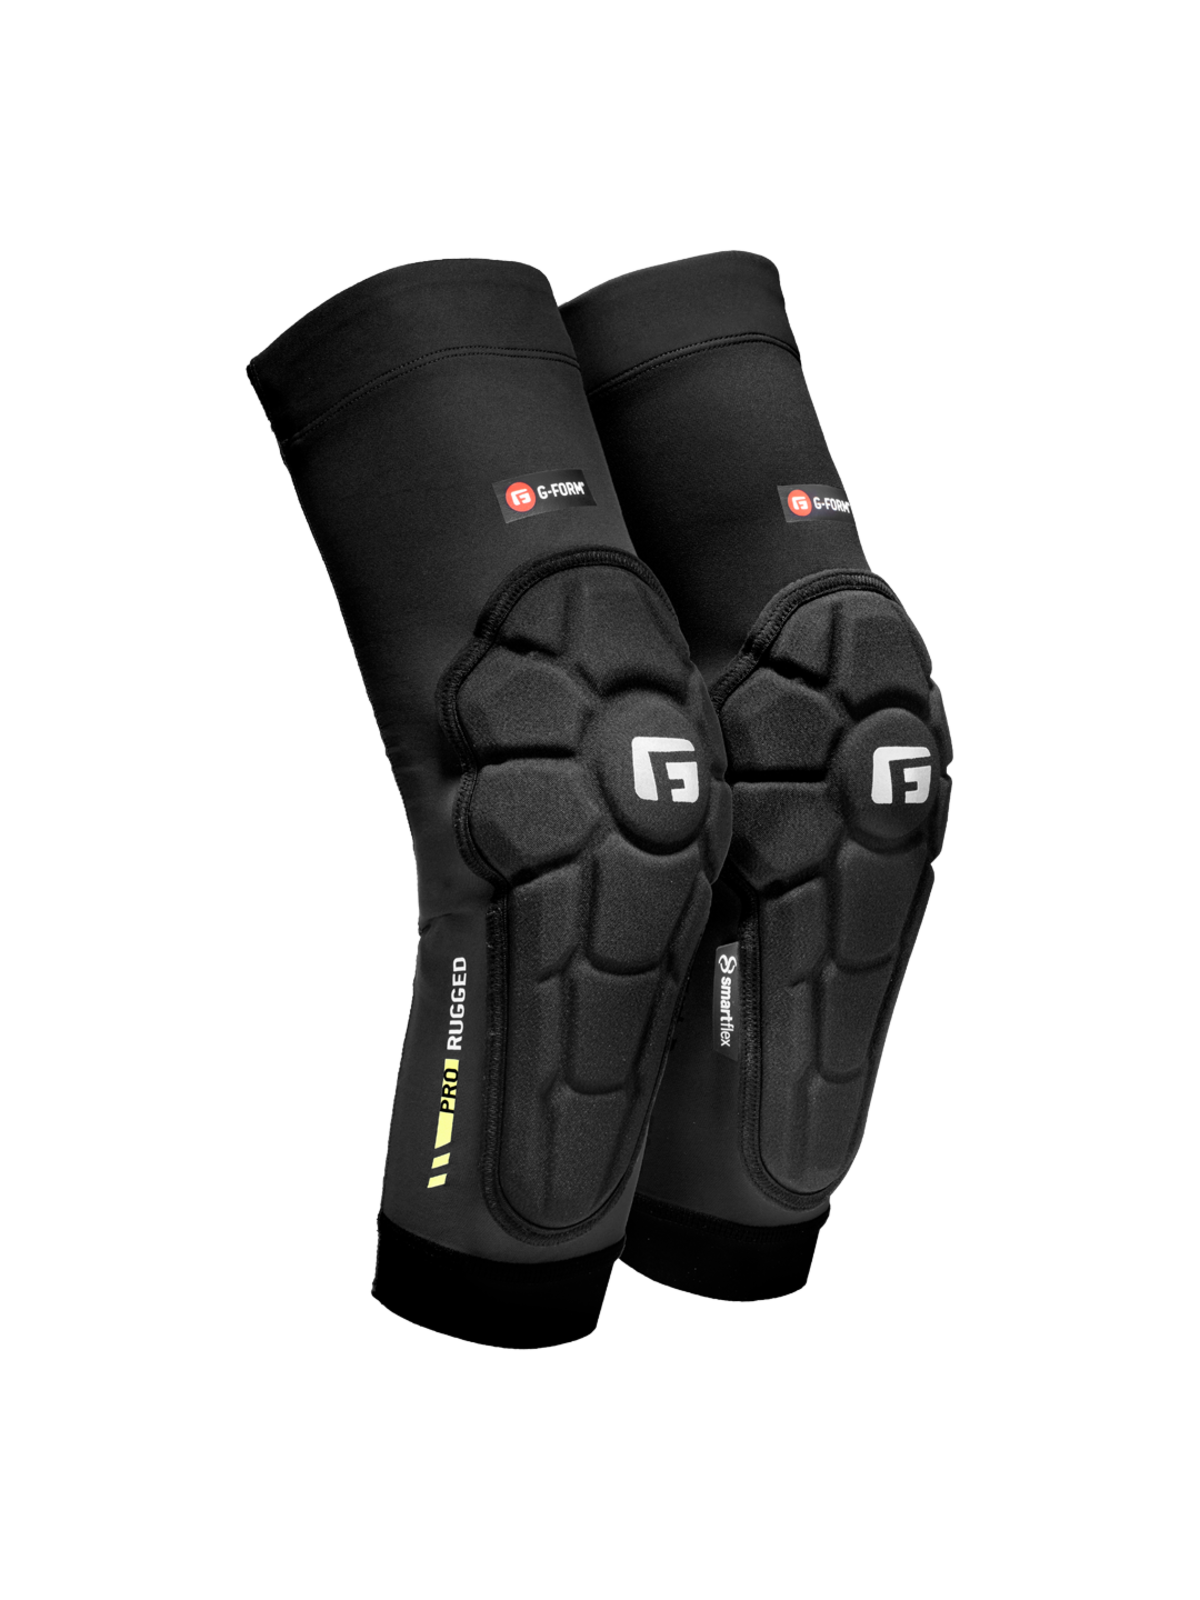 g-form-pro-rugged-2-elbow-guards-trek-bikes